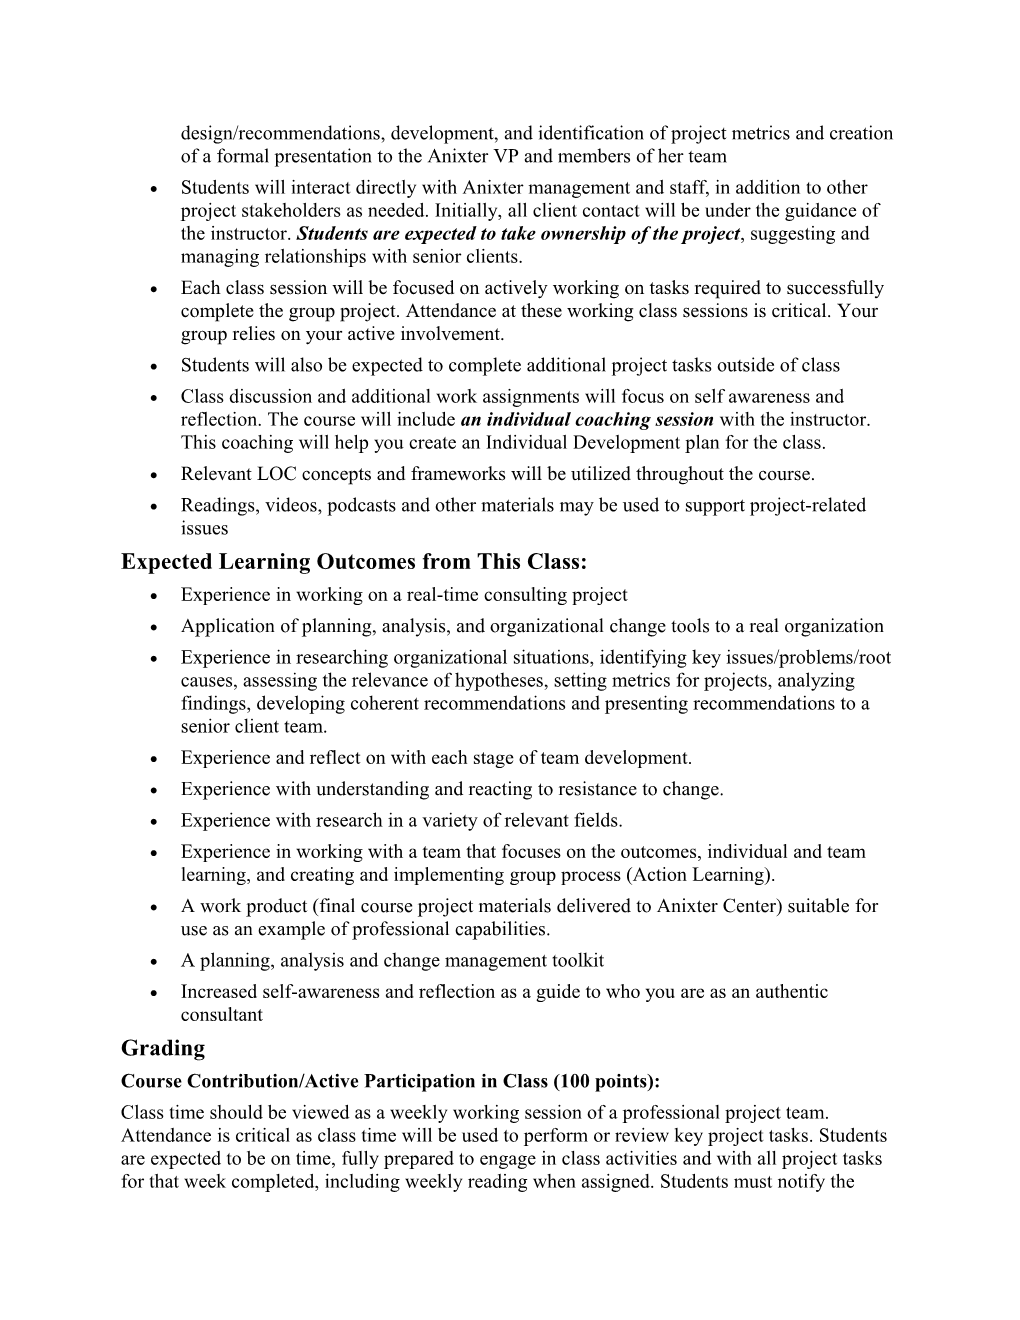 Learning & Organizational Change LOC 391:Organizational Planning and Analysis